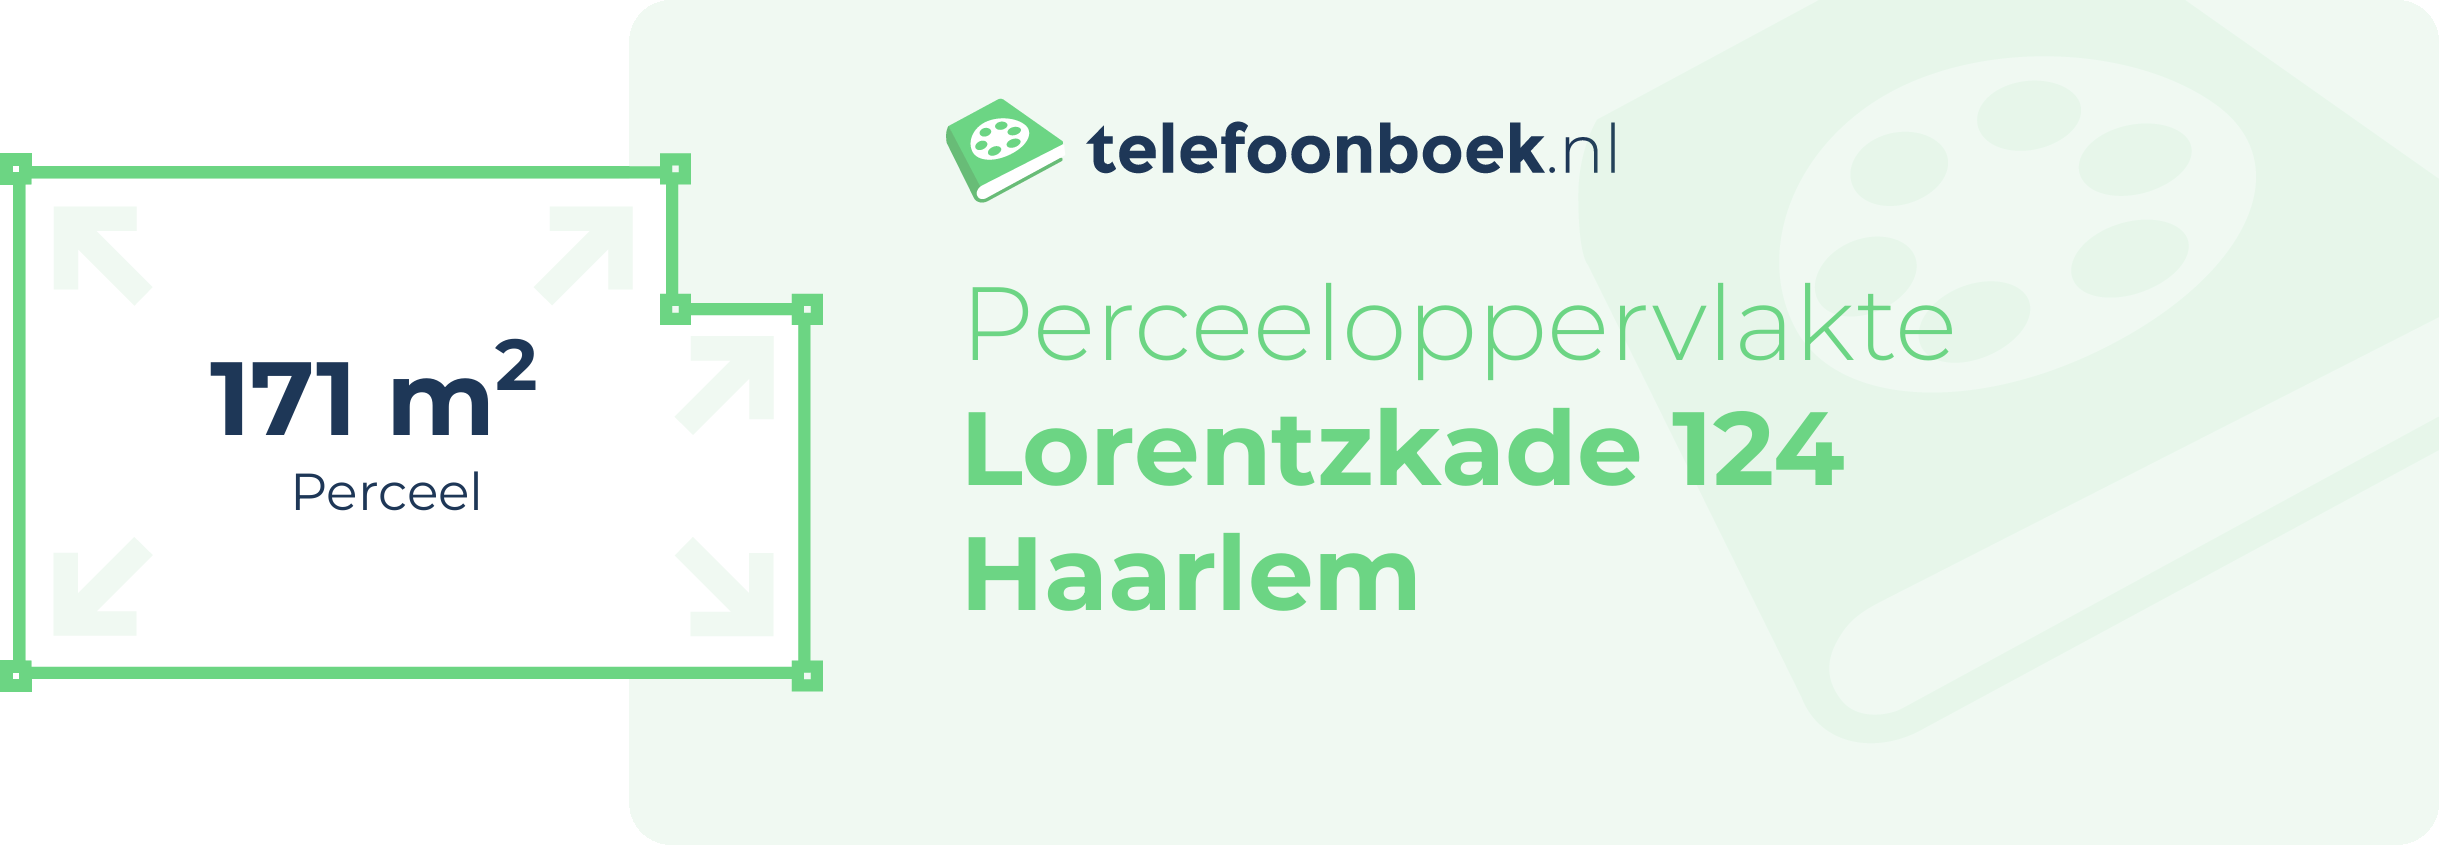 Perceeloppervlakte Lorentzkade 124 Haarlem